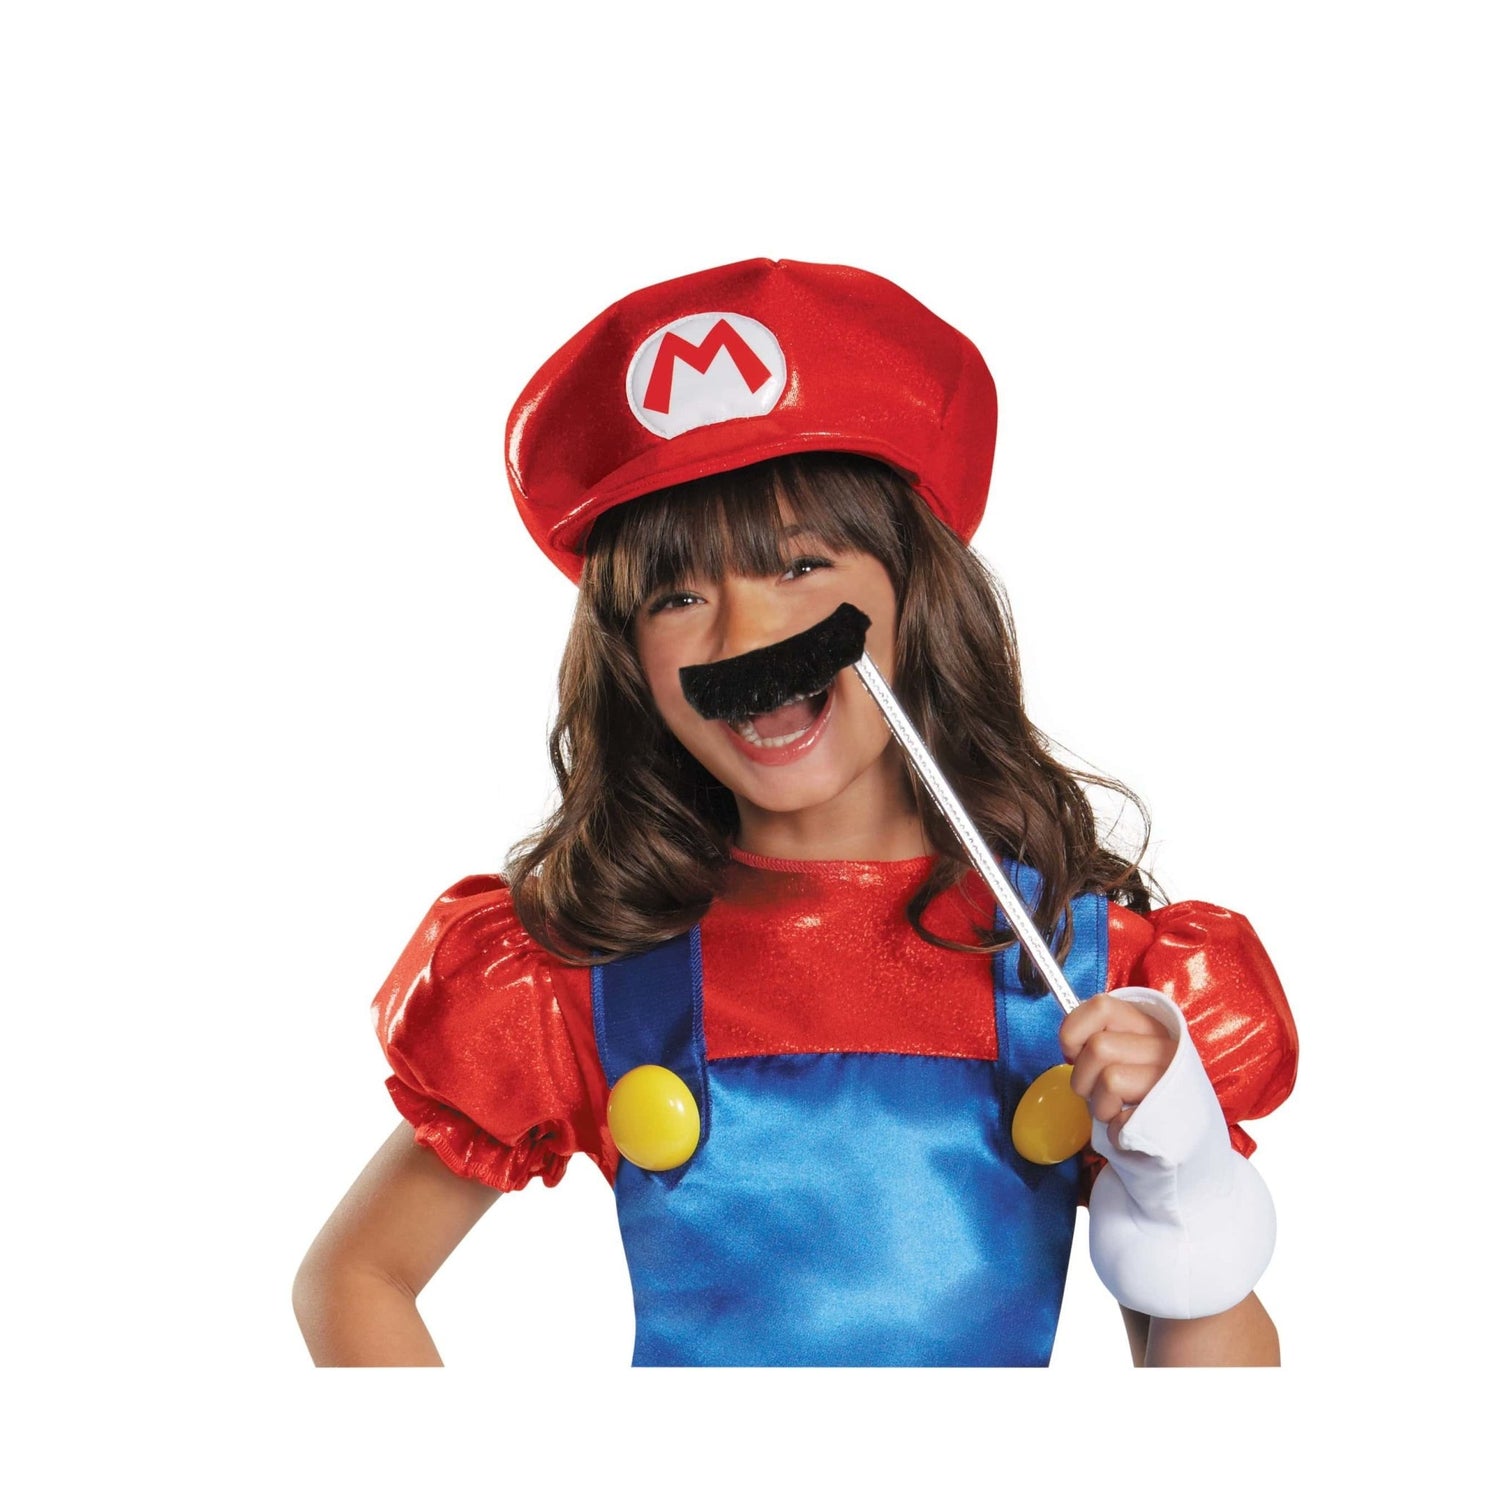 Super Mario Brothers Raccoon Deluxe Costume for Kids